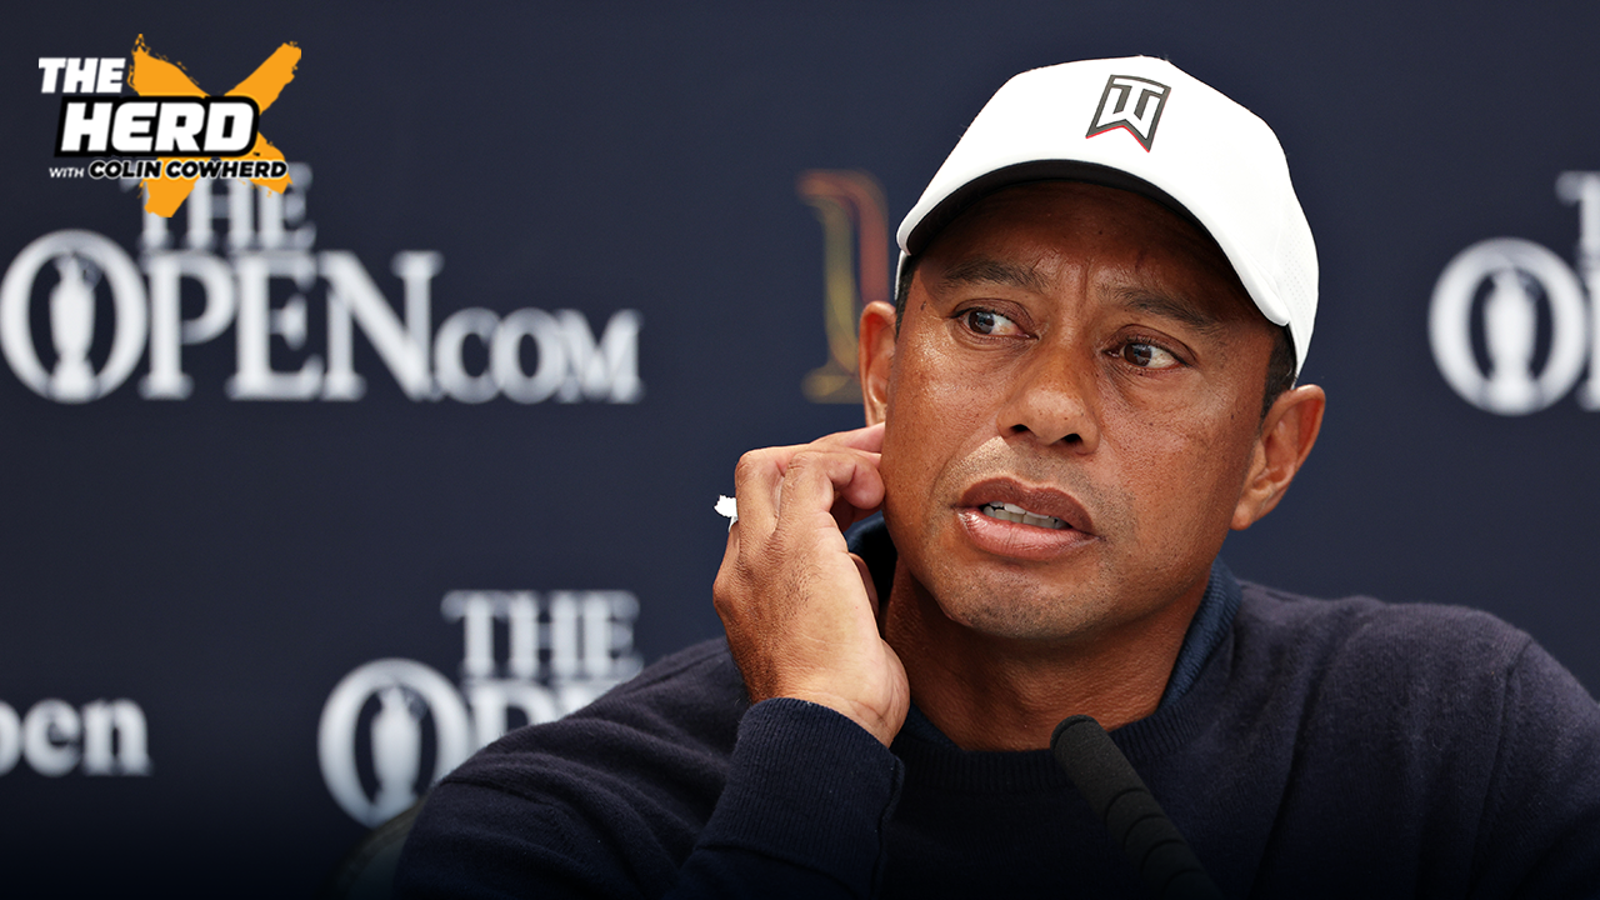 Woods says LIV players "turned their backs" on PGA